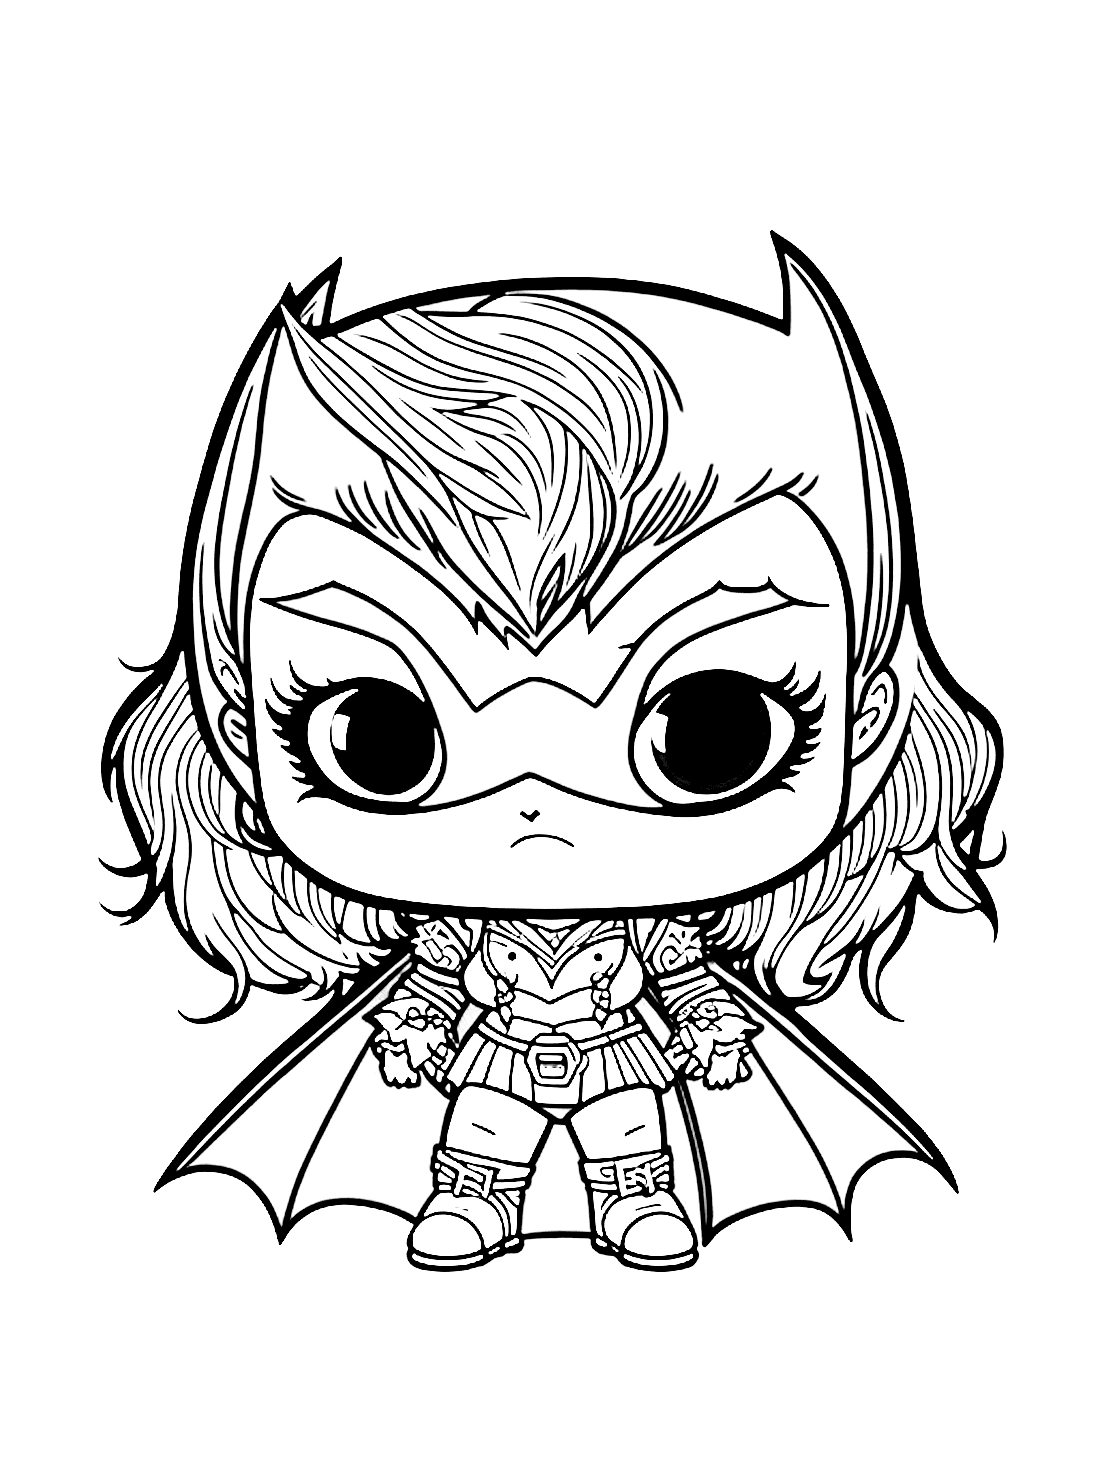 Batwoman characters